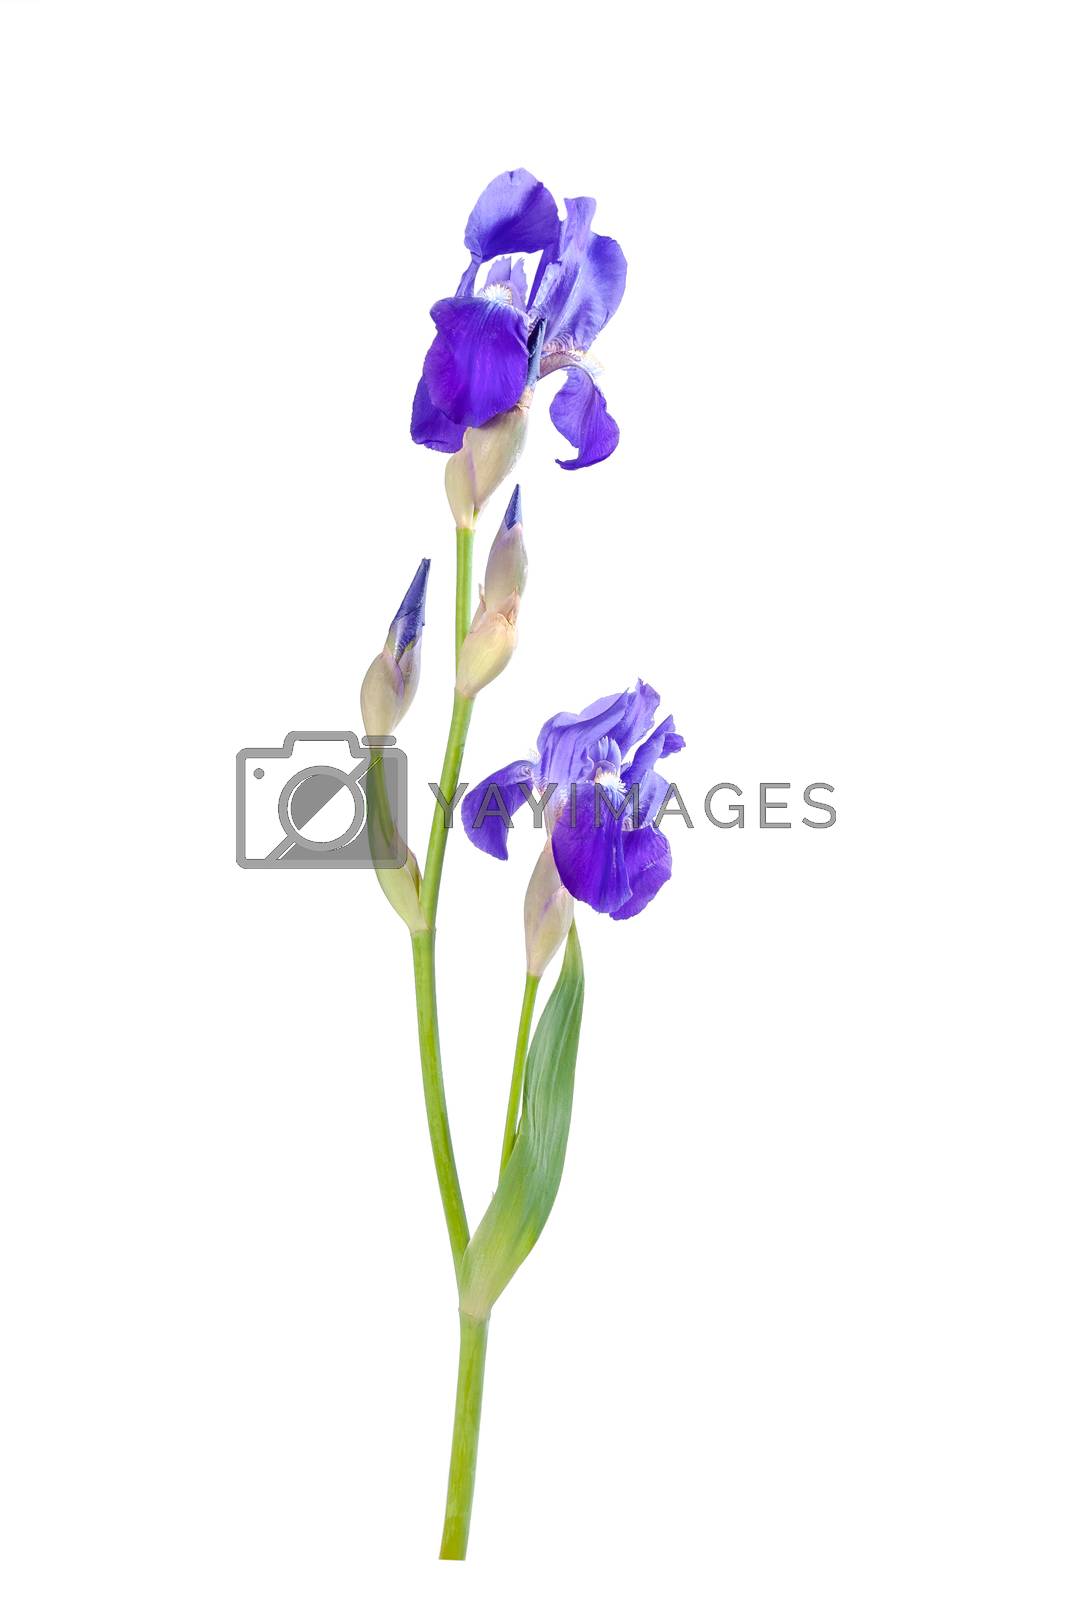 Royalty free image of Iris flower 02 by firewings